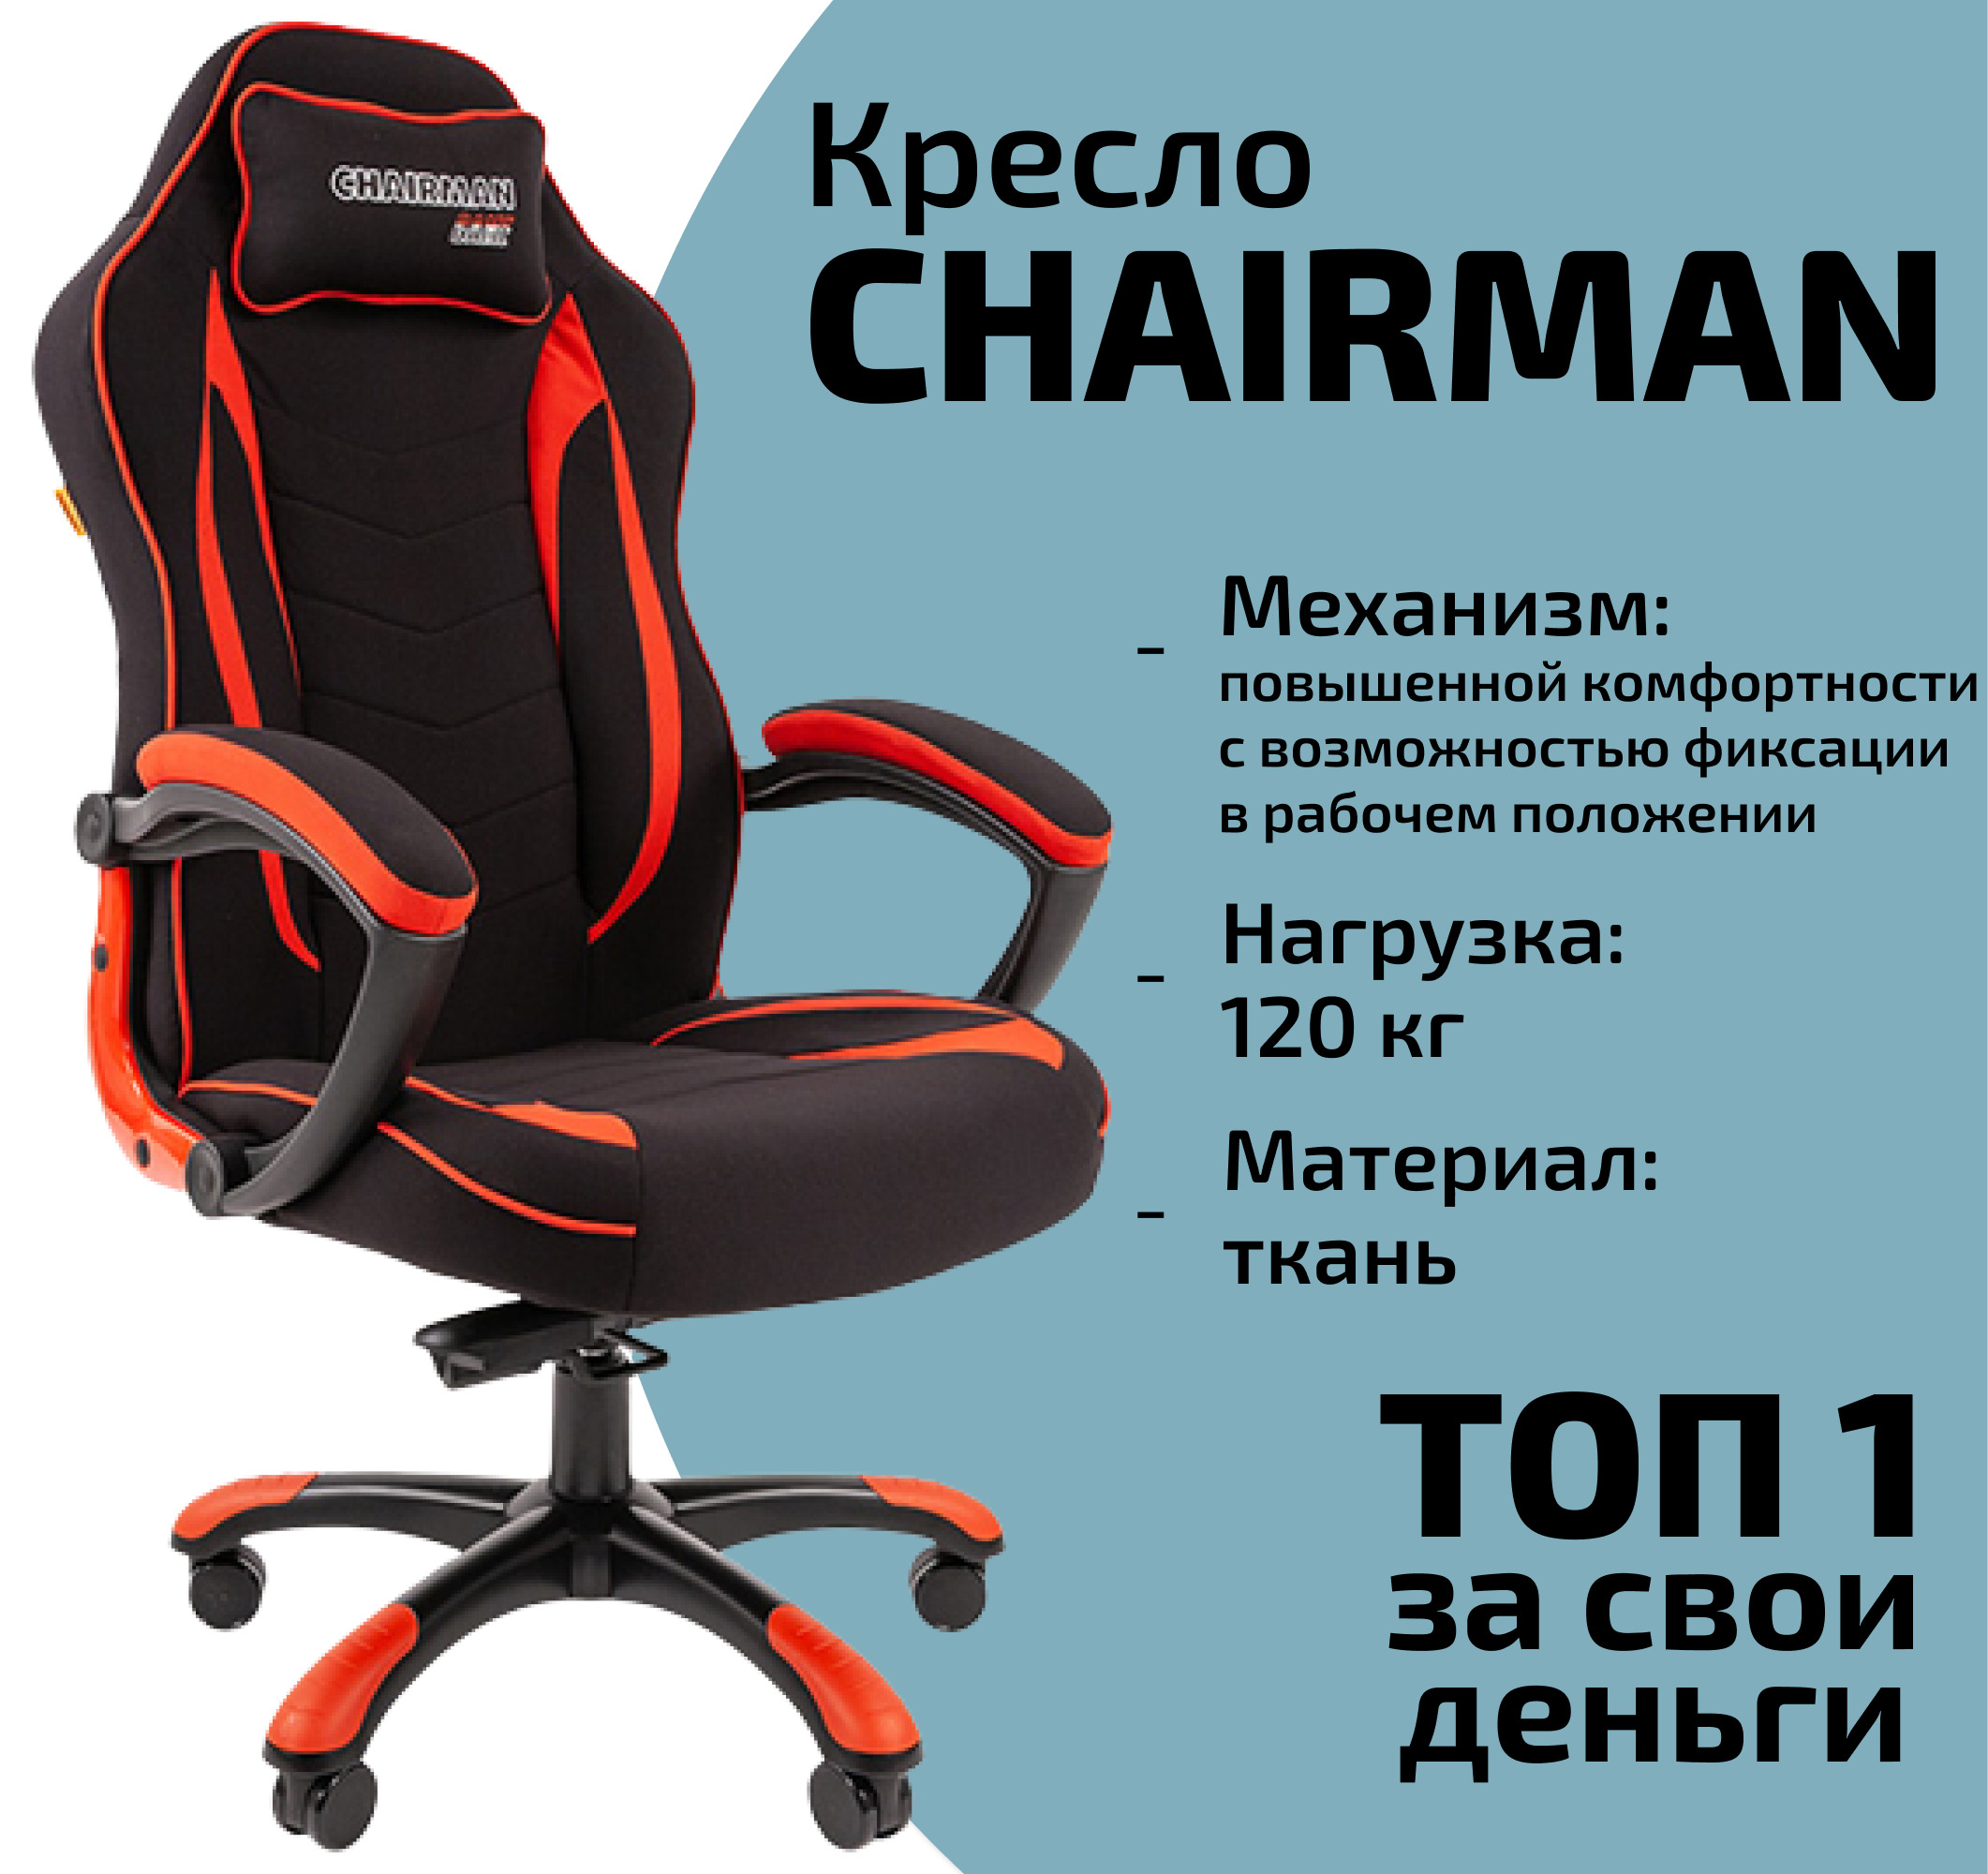 Кресло chairman game 17 инструкция